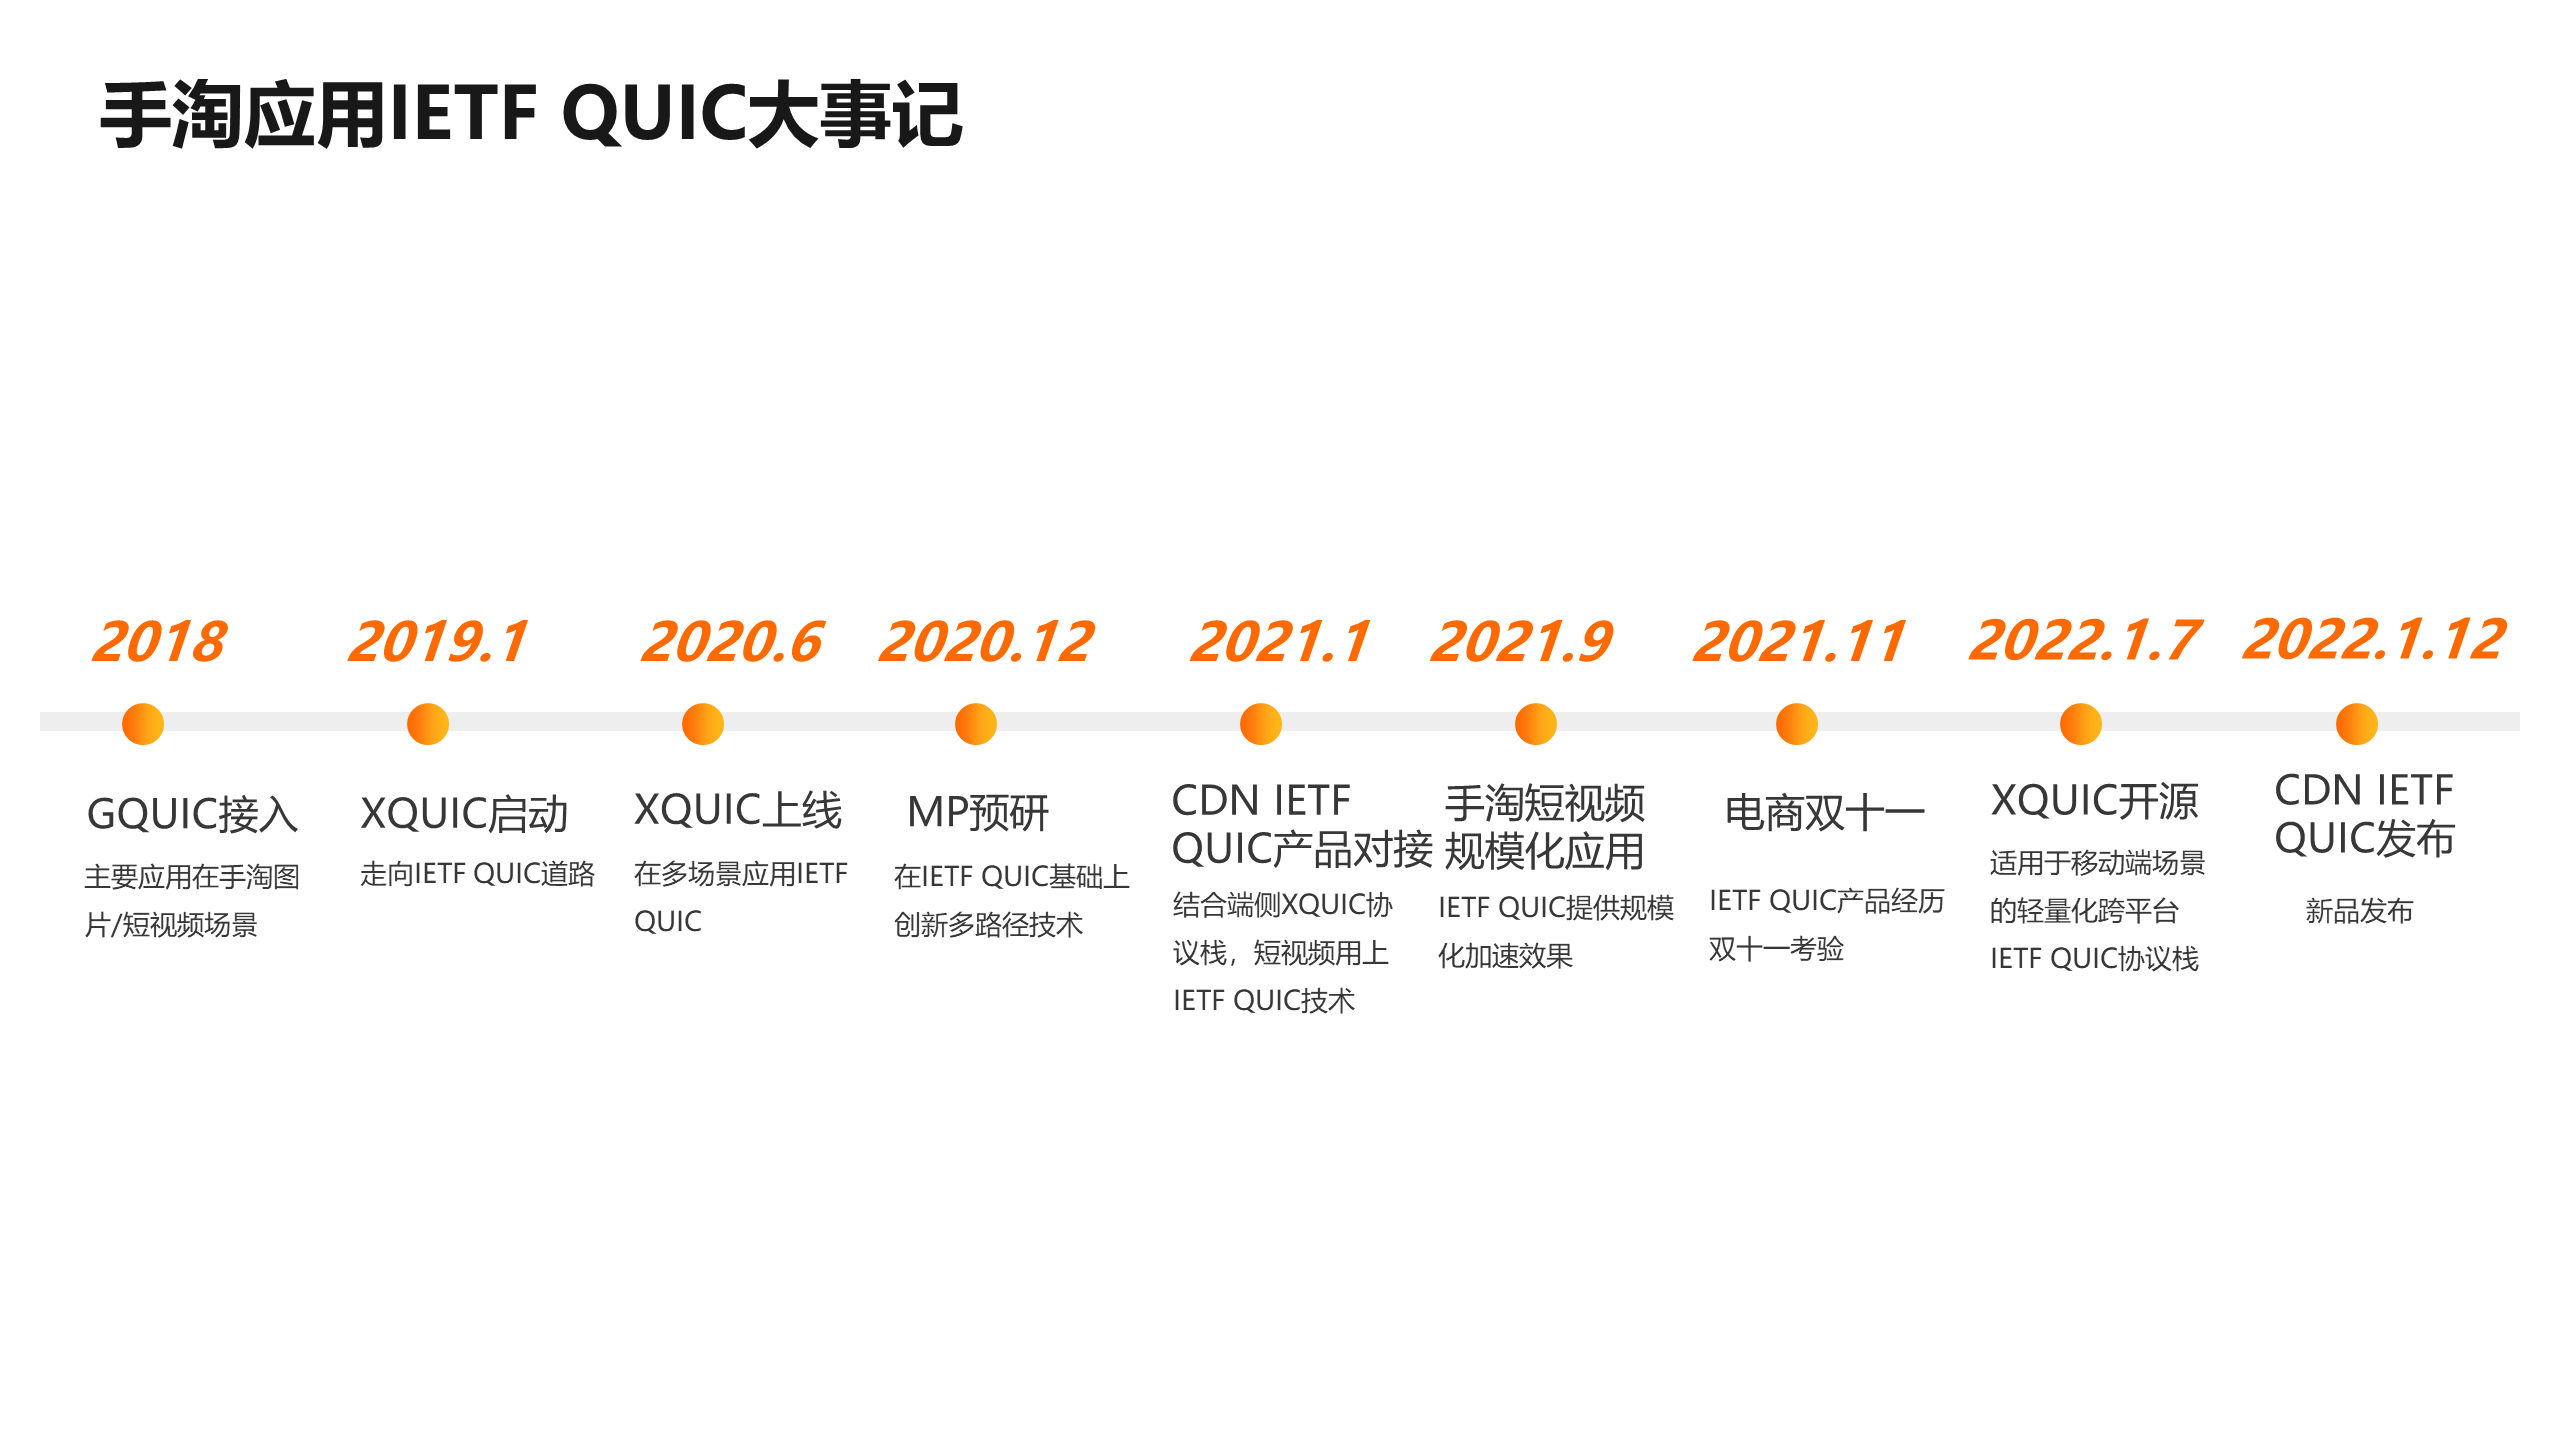 QUIC新品发布会-手淘应用场景及XQUIC介绍v0